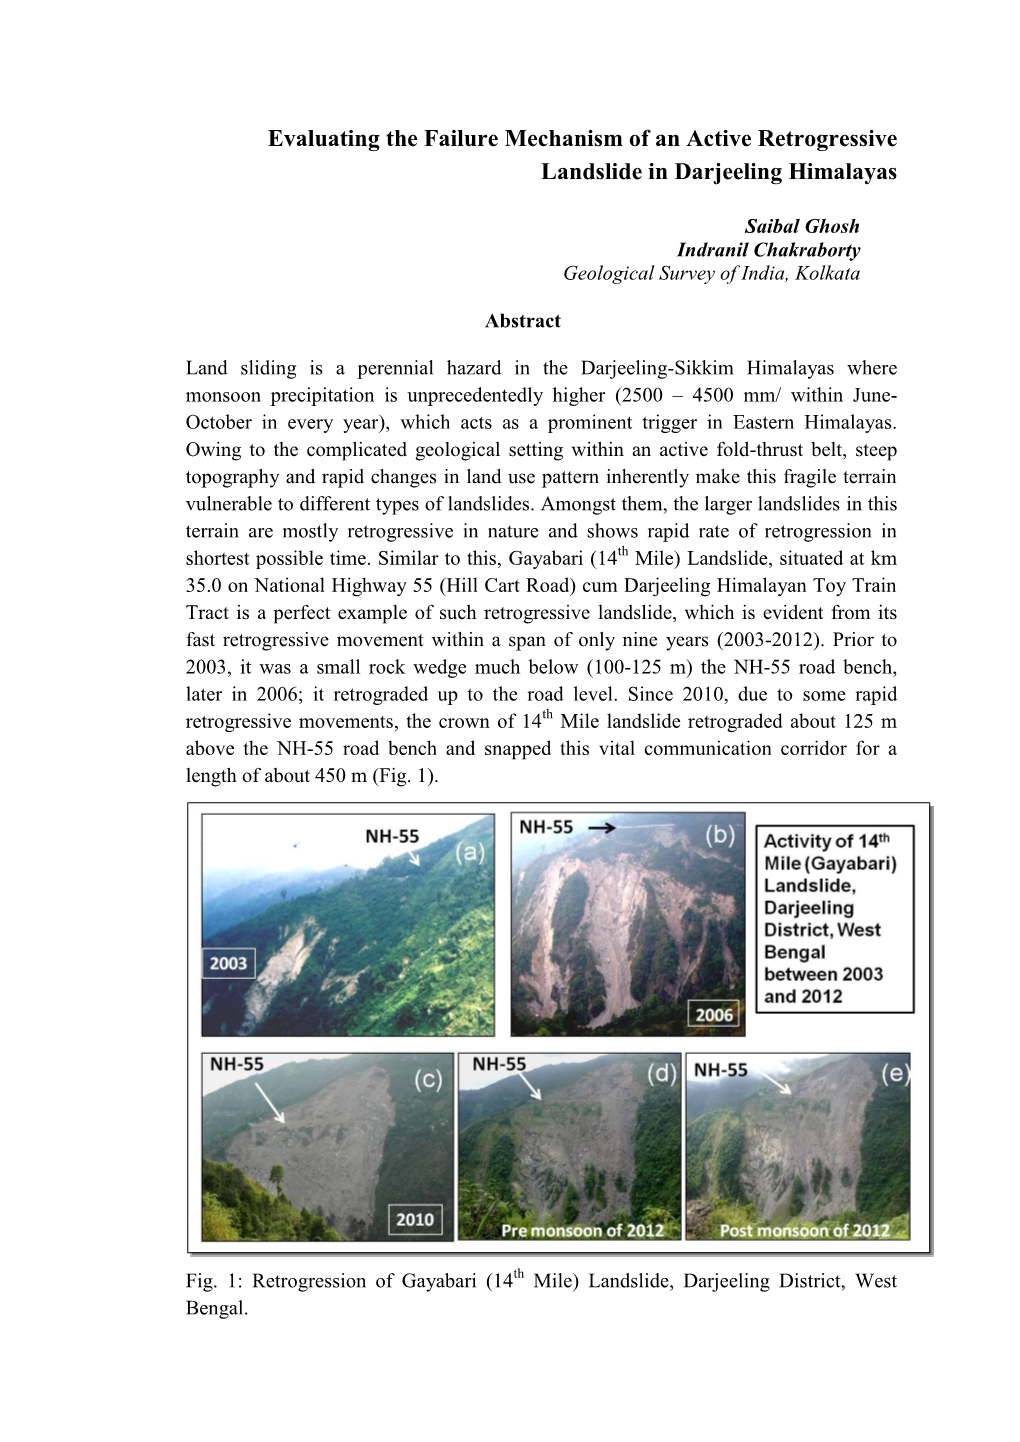 Evaluating the Failure Mechanism of an Active Retrogressive Landslide in Darjeeling Himalayas